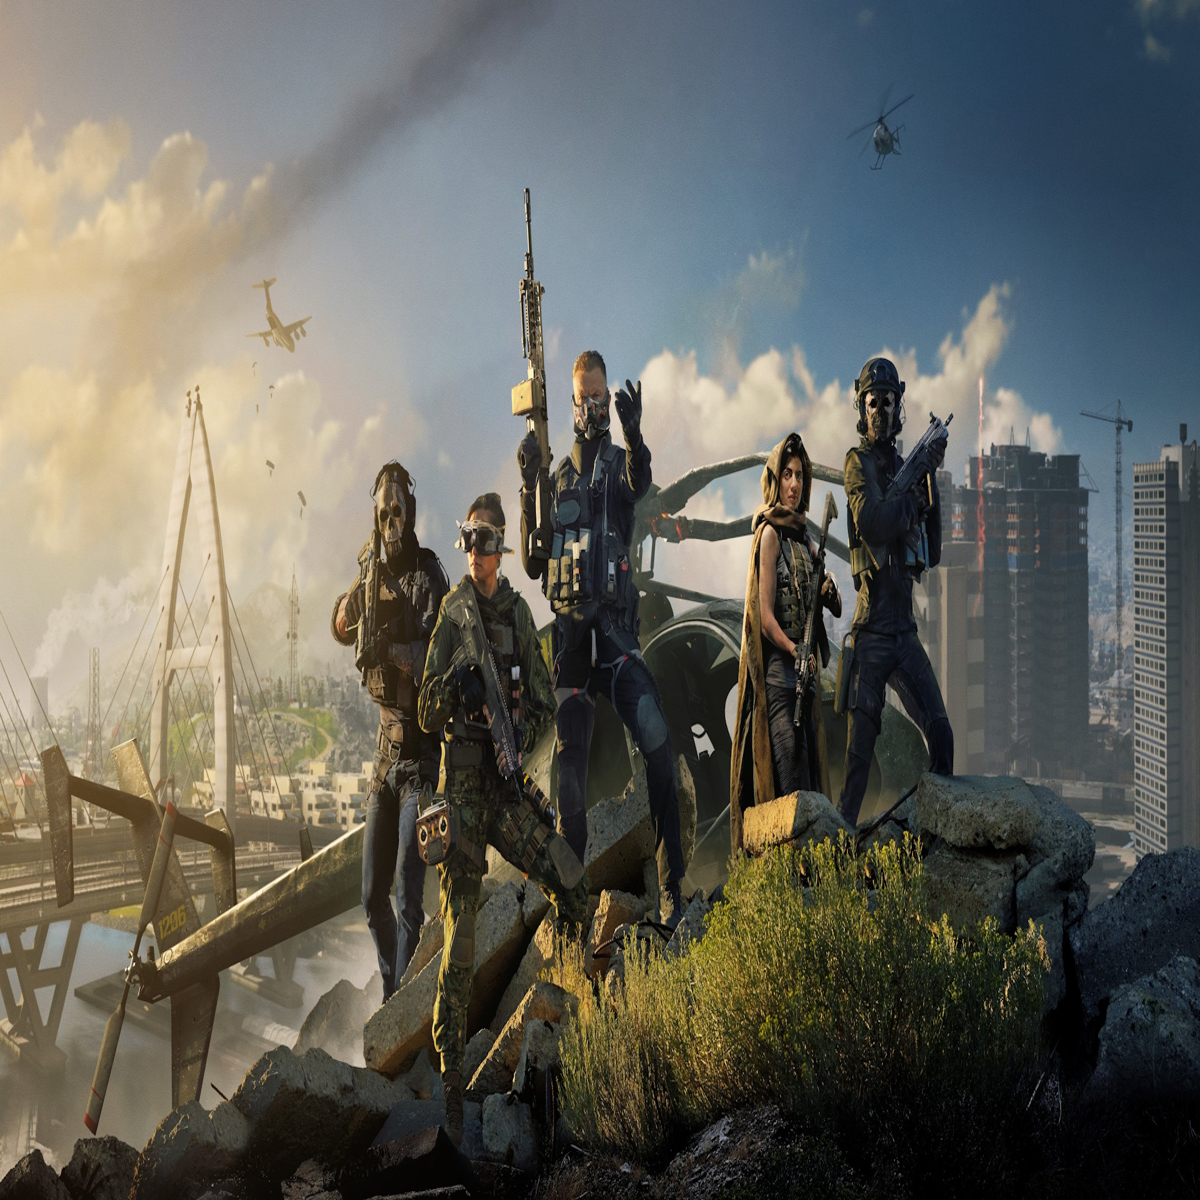 Call of Duty Warzone Mobile release date prediction & pre-register